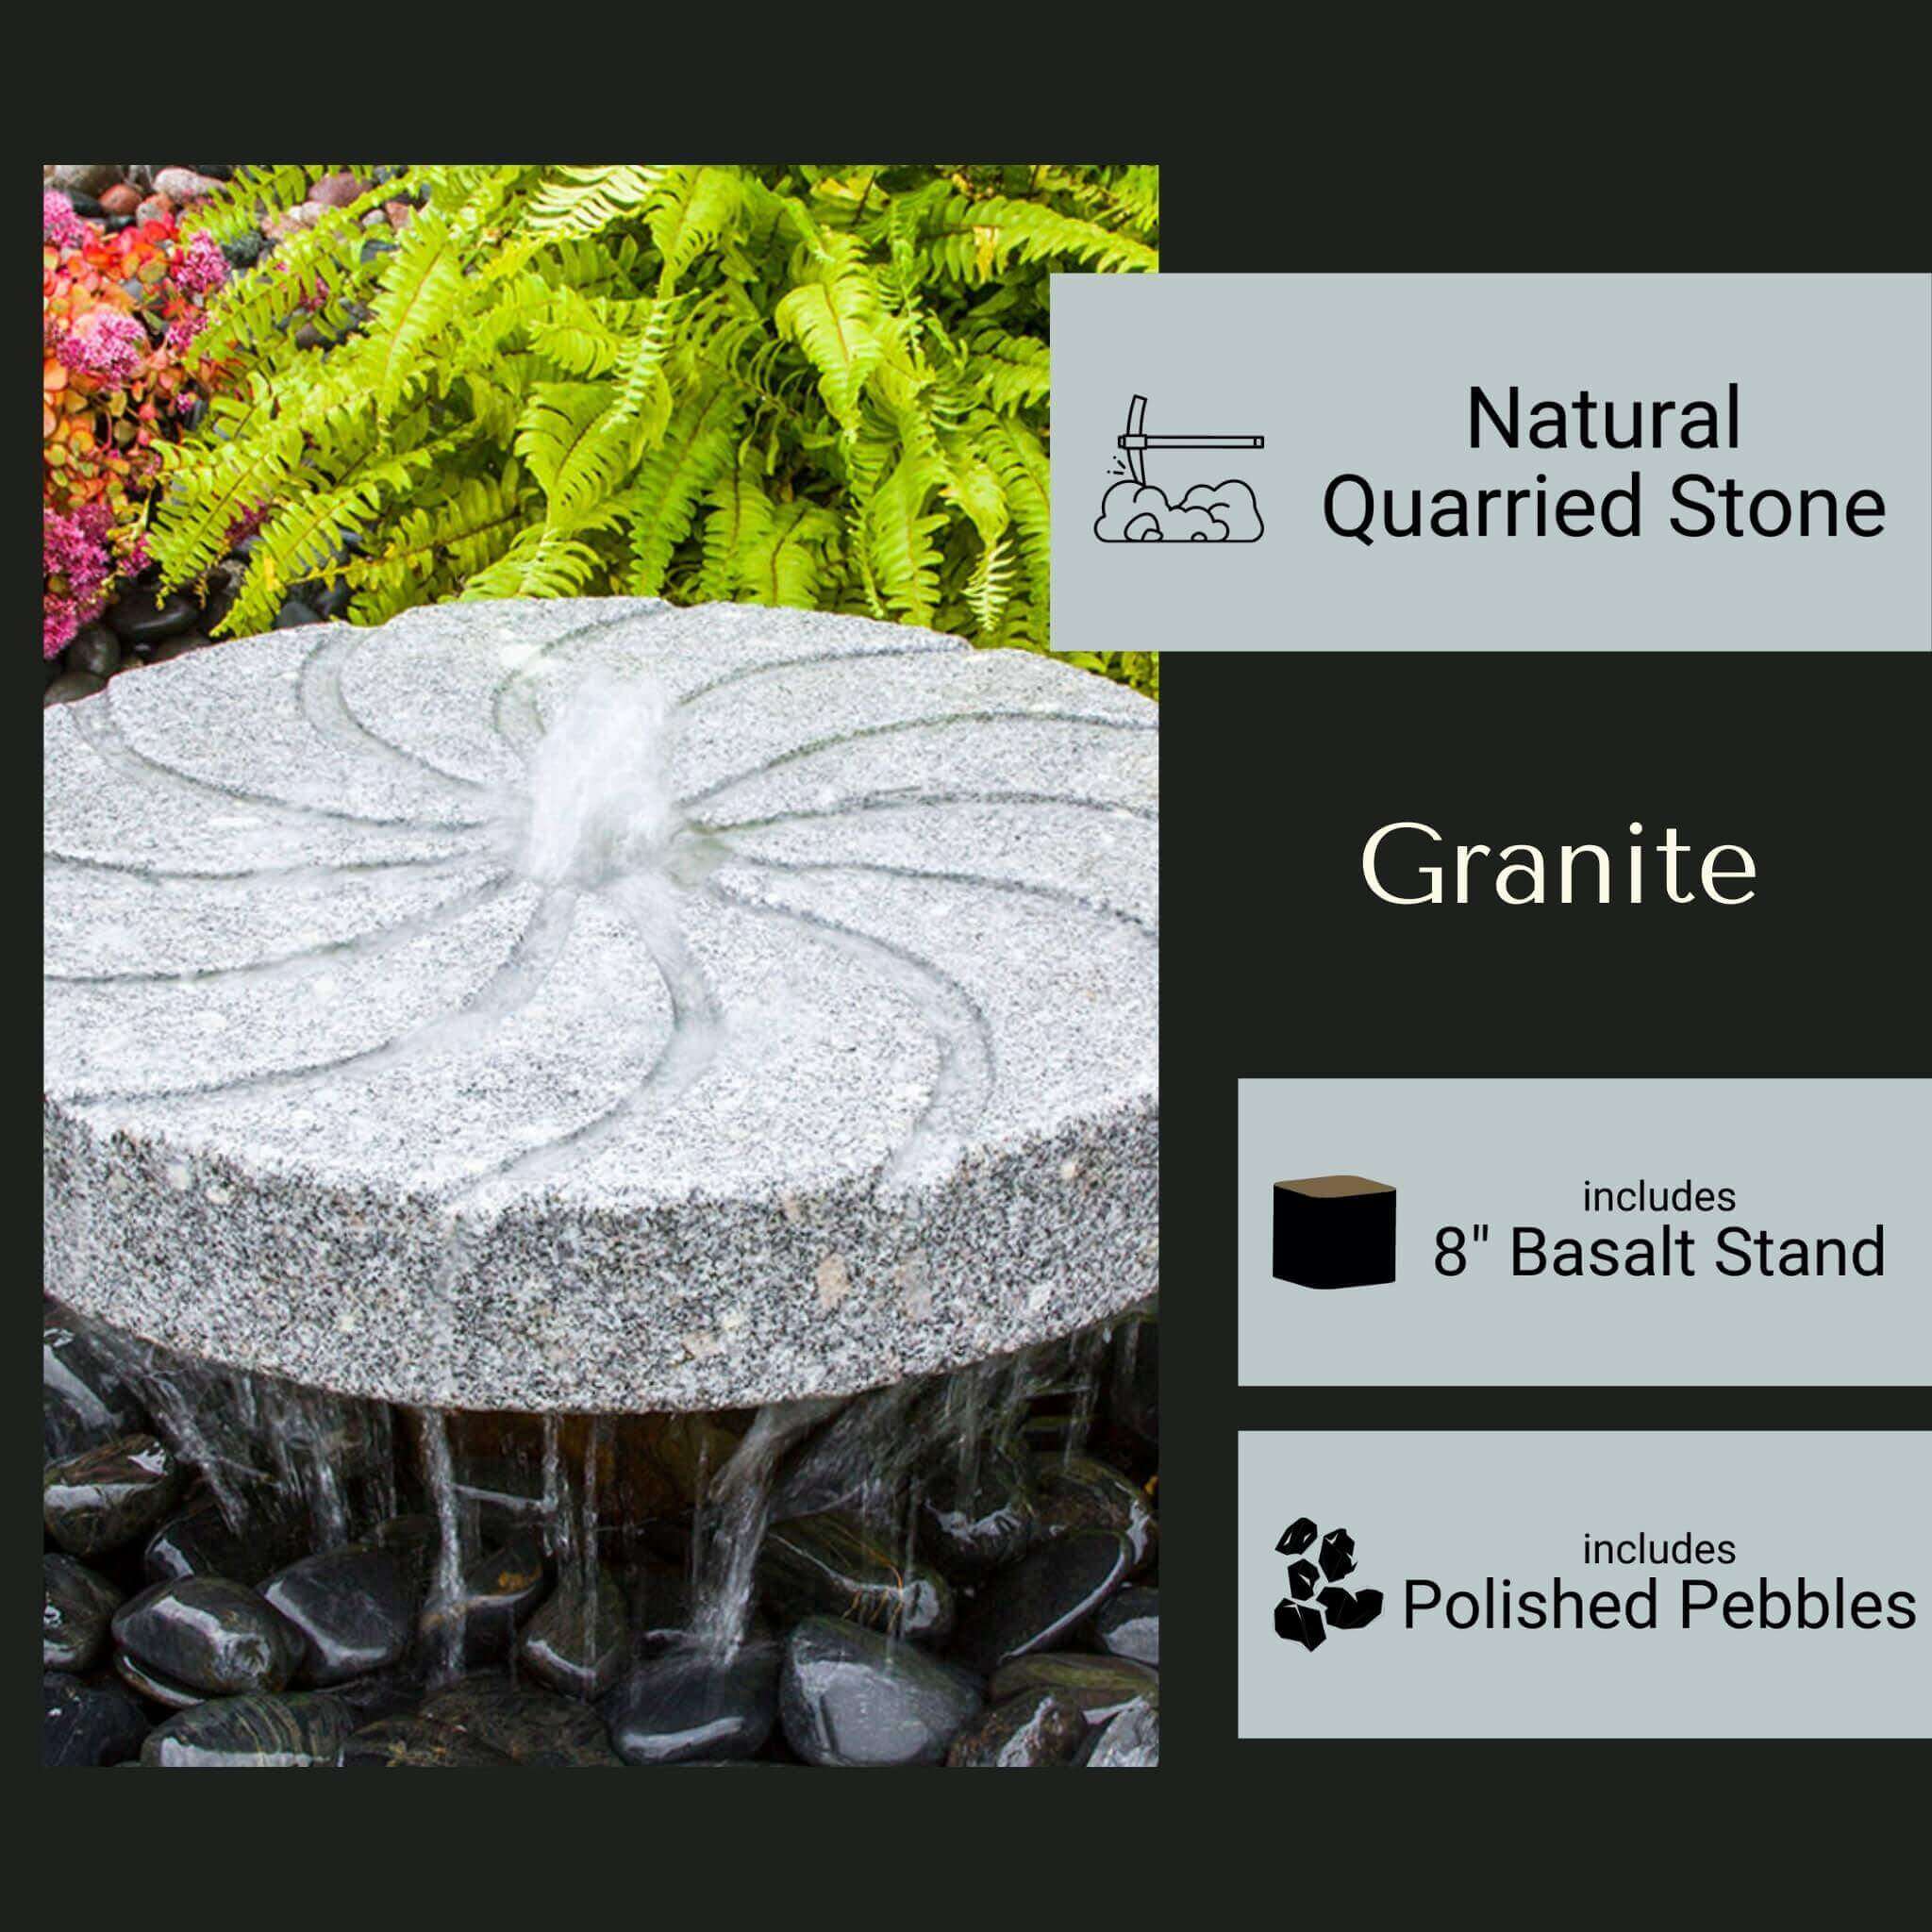 Granite Millstone "Swirl" Fountain - Complete Kit - Blue Thumb